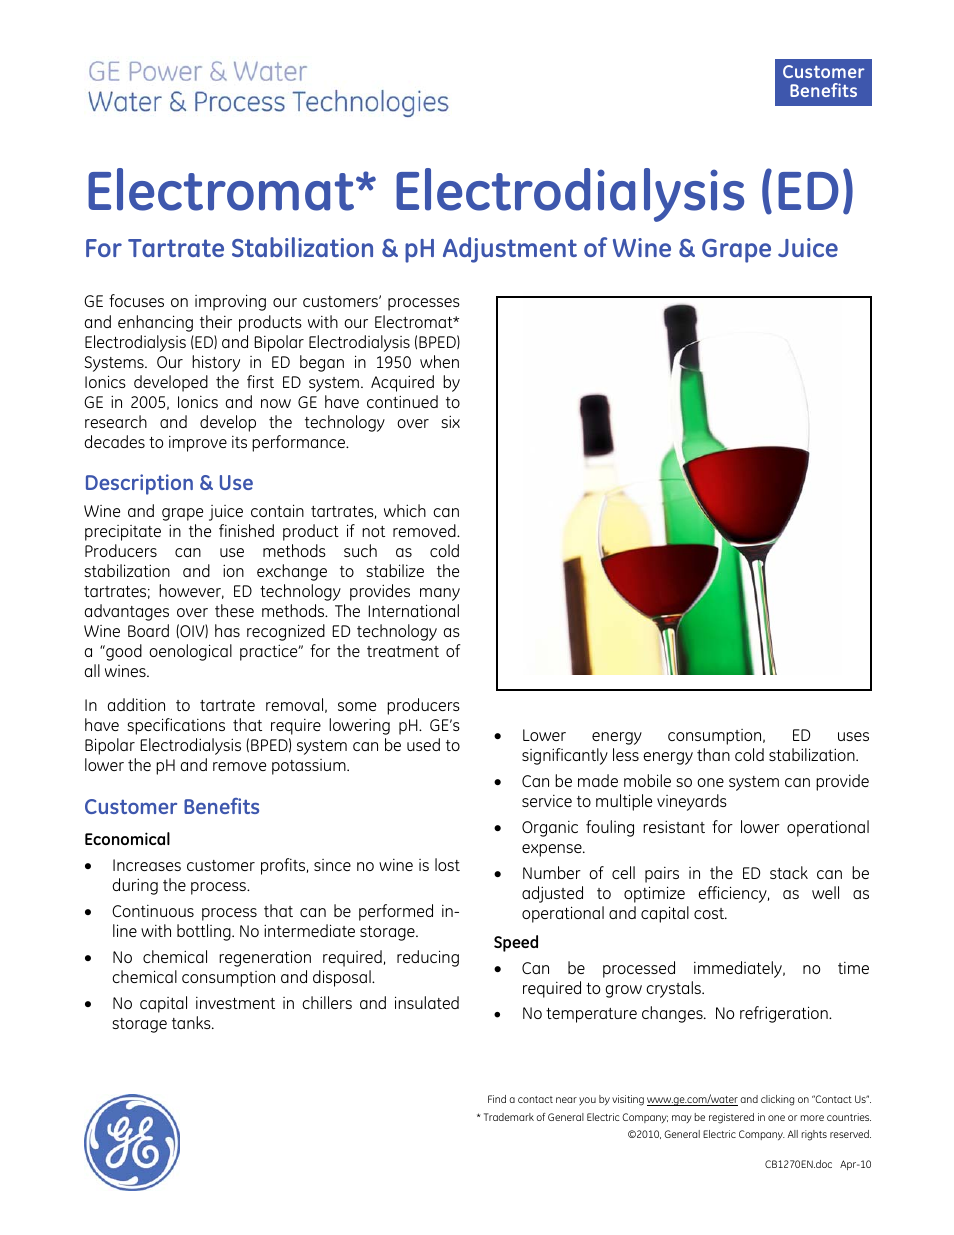 Electrodialysis (ED) for Tartrate Stabilization & pH Adjustment of Wine & Grape Juice